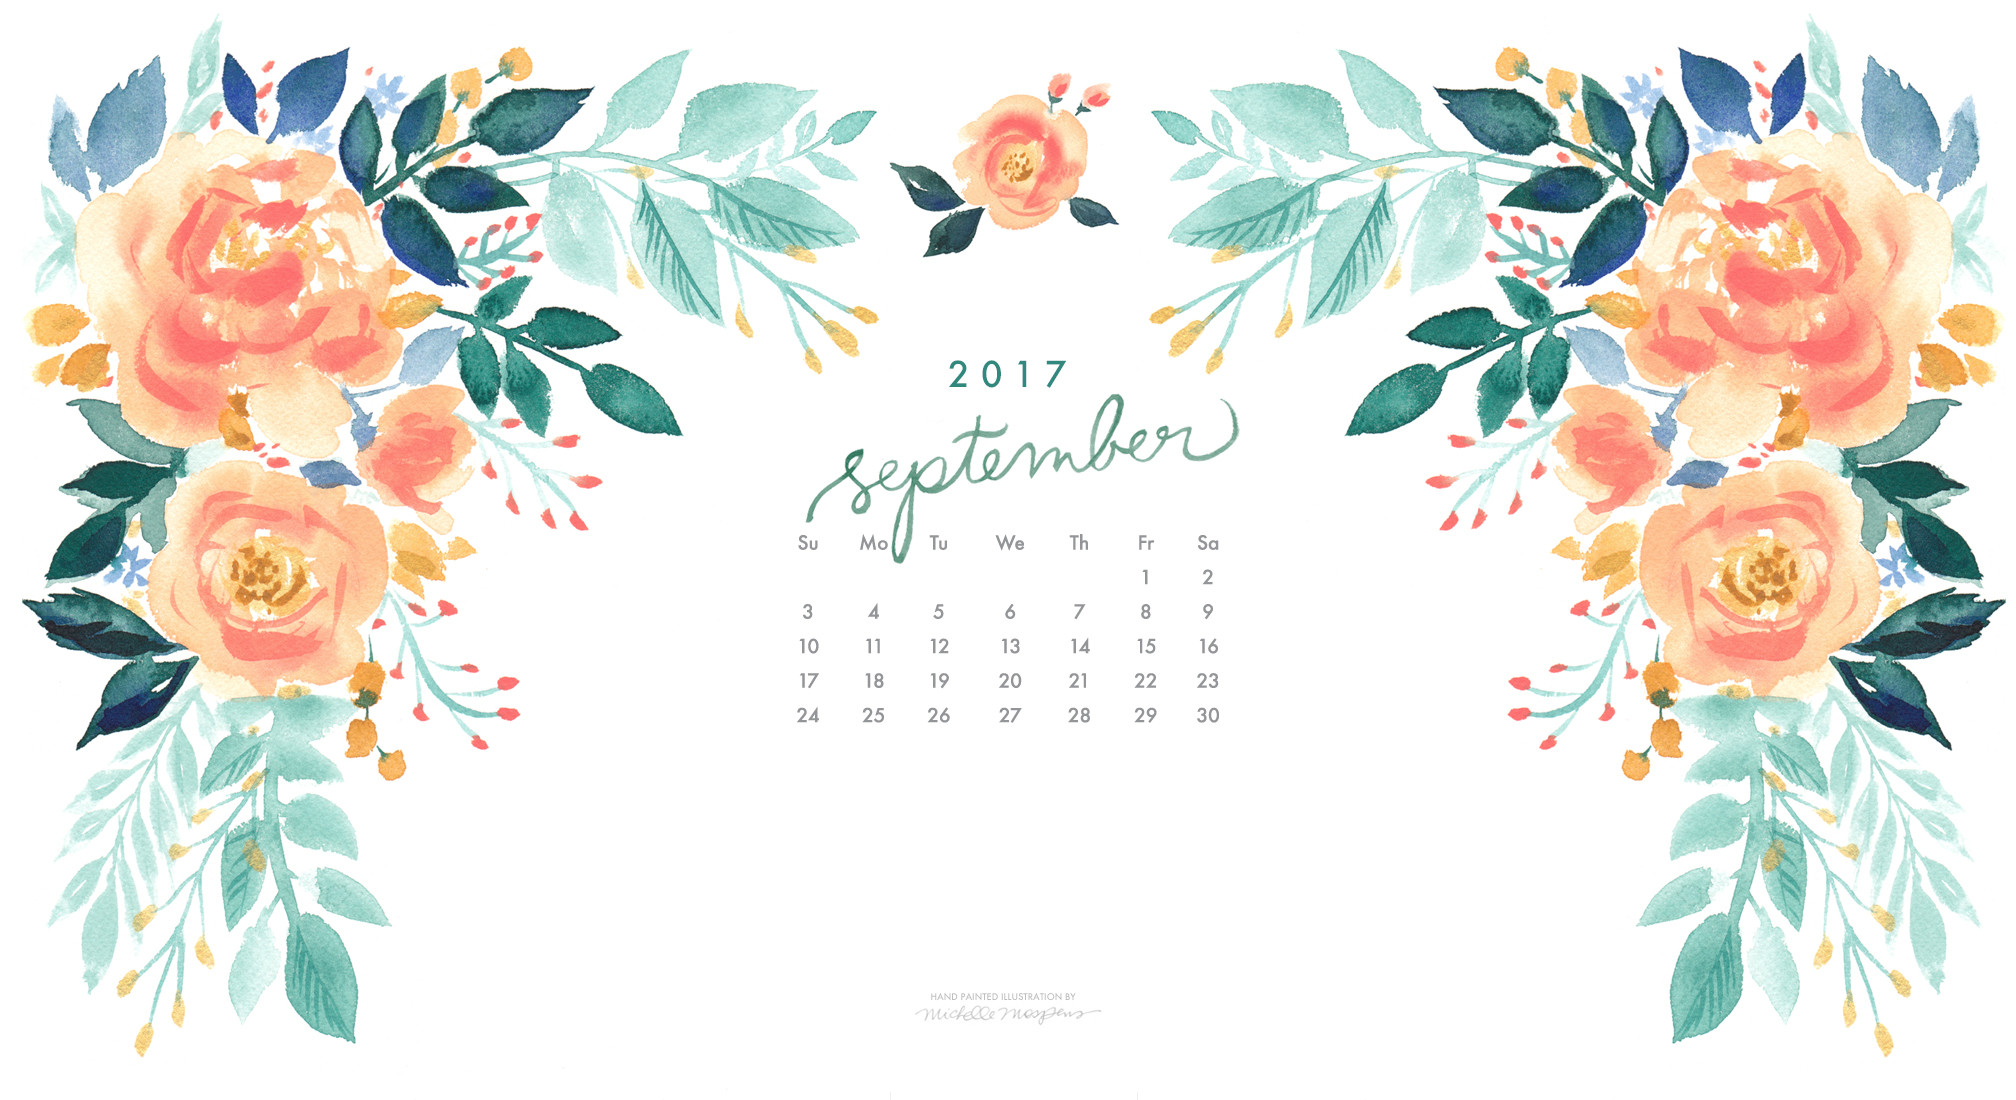 2016x1100 Pretty peach blooms watercolor September 2017 calendar wallpaper for your  computer. 100% original art